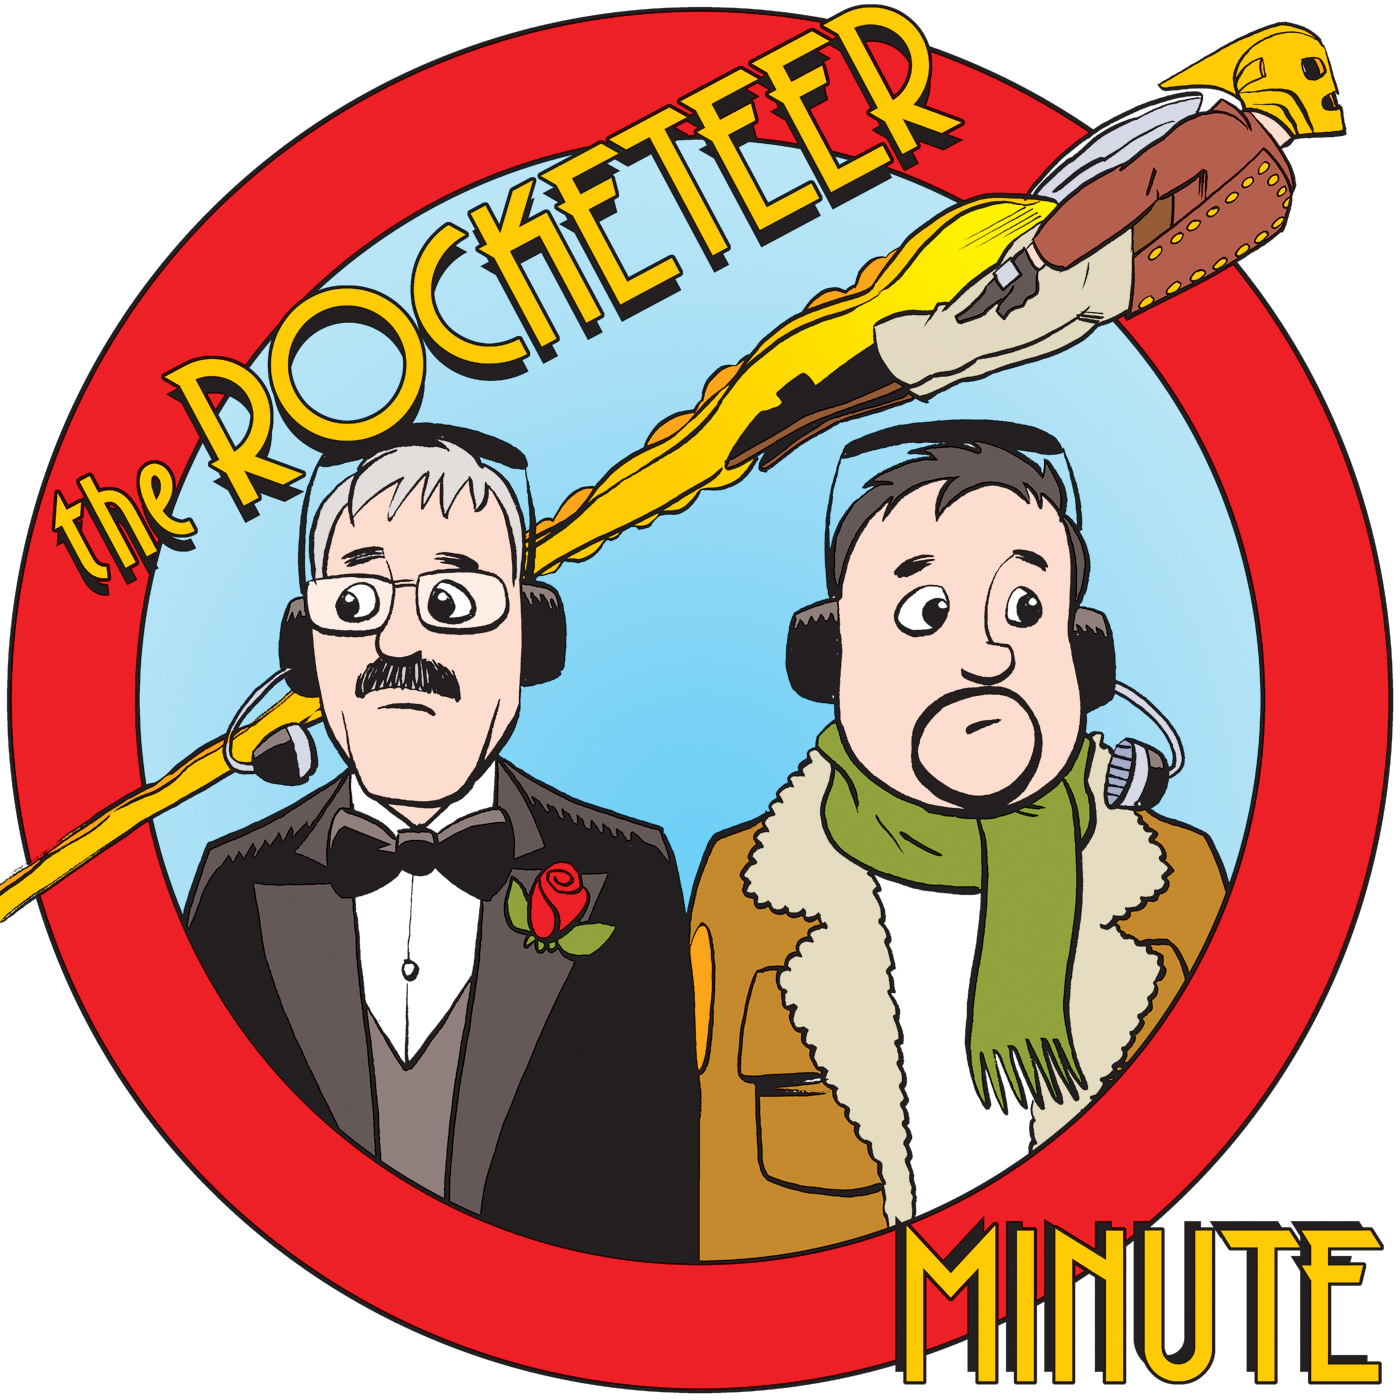 The Rocketeer Minute